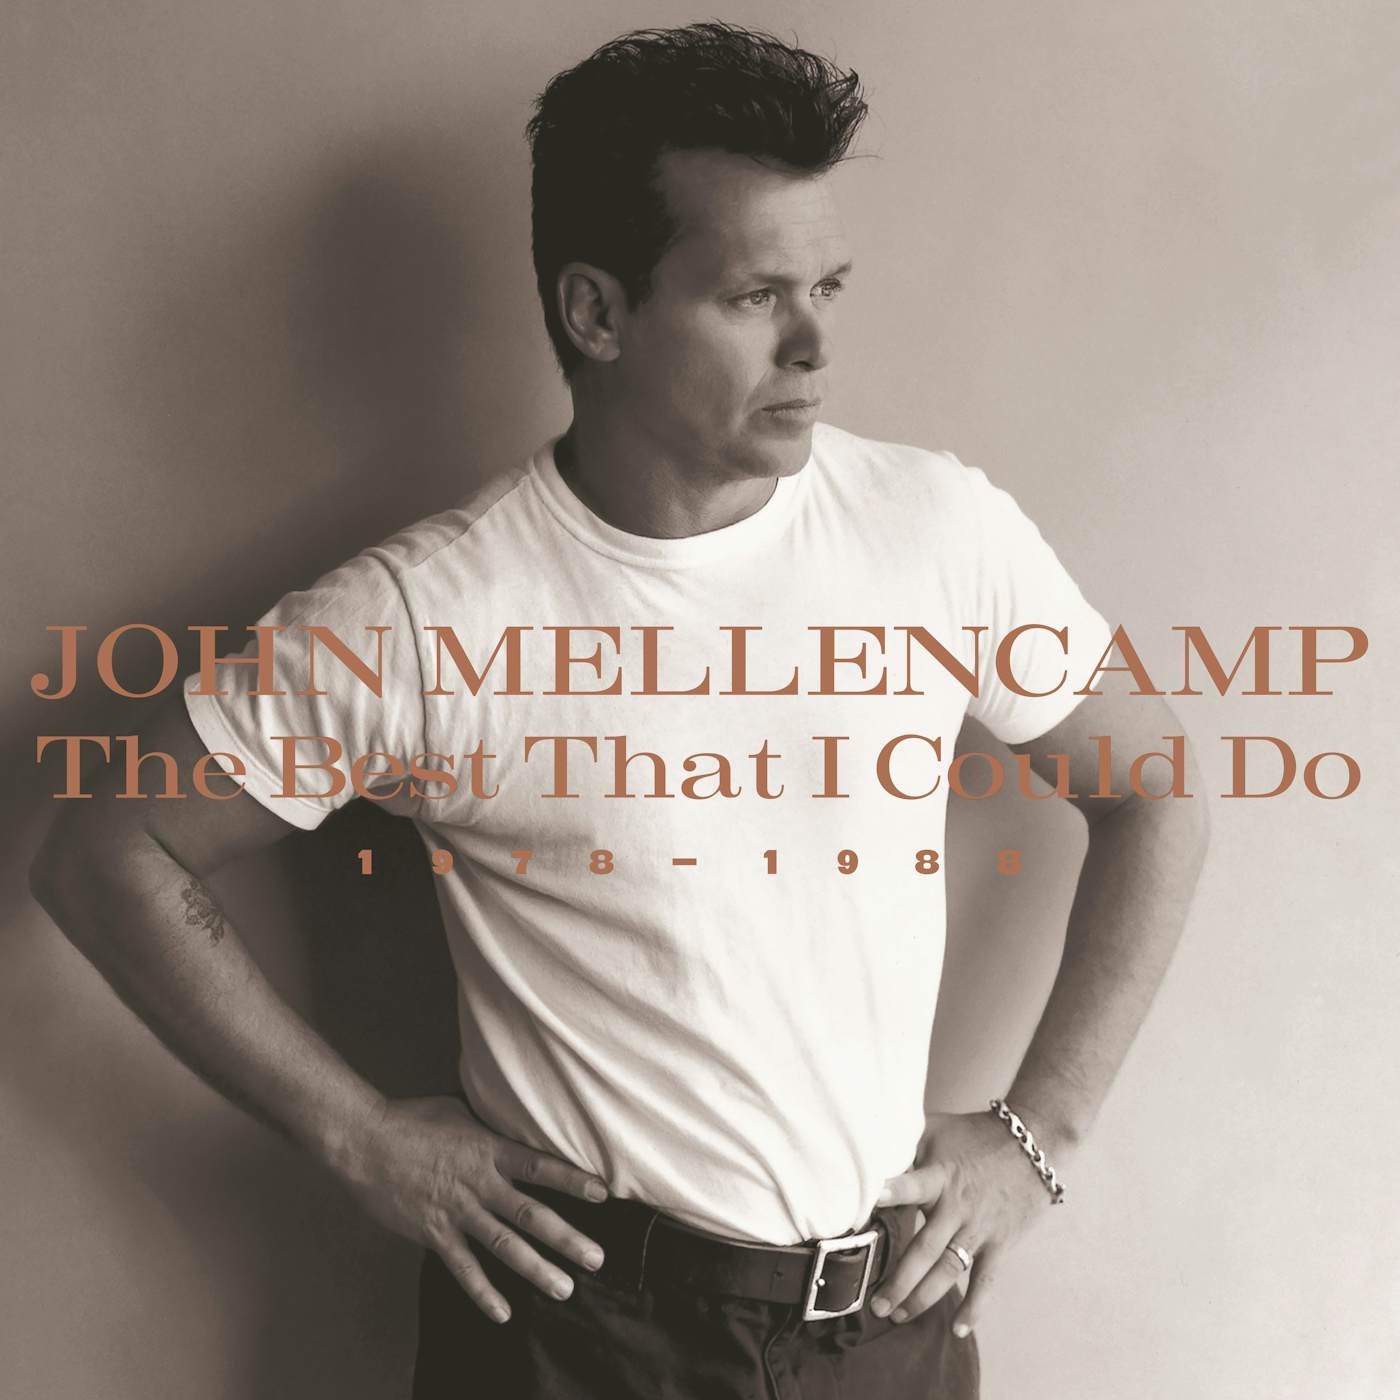 John Mellencamp BEST THAT I COULD DO 1978-1988 Vinyl Record